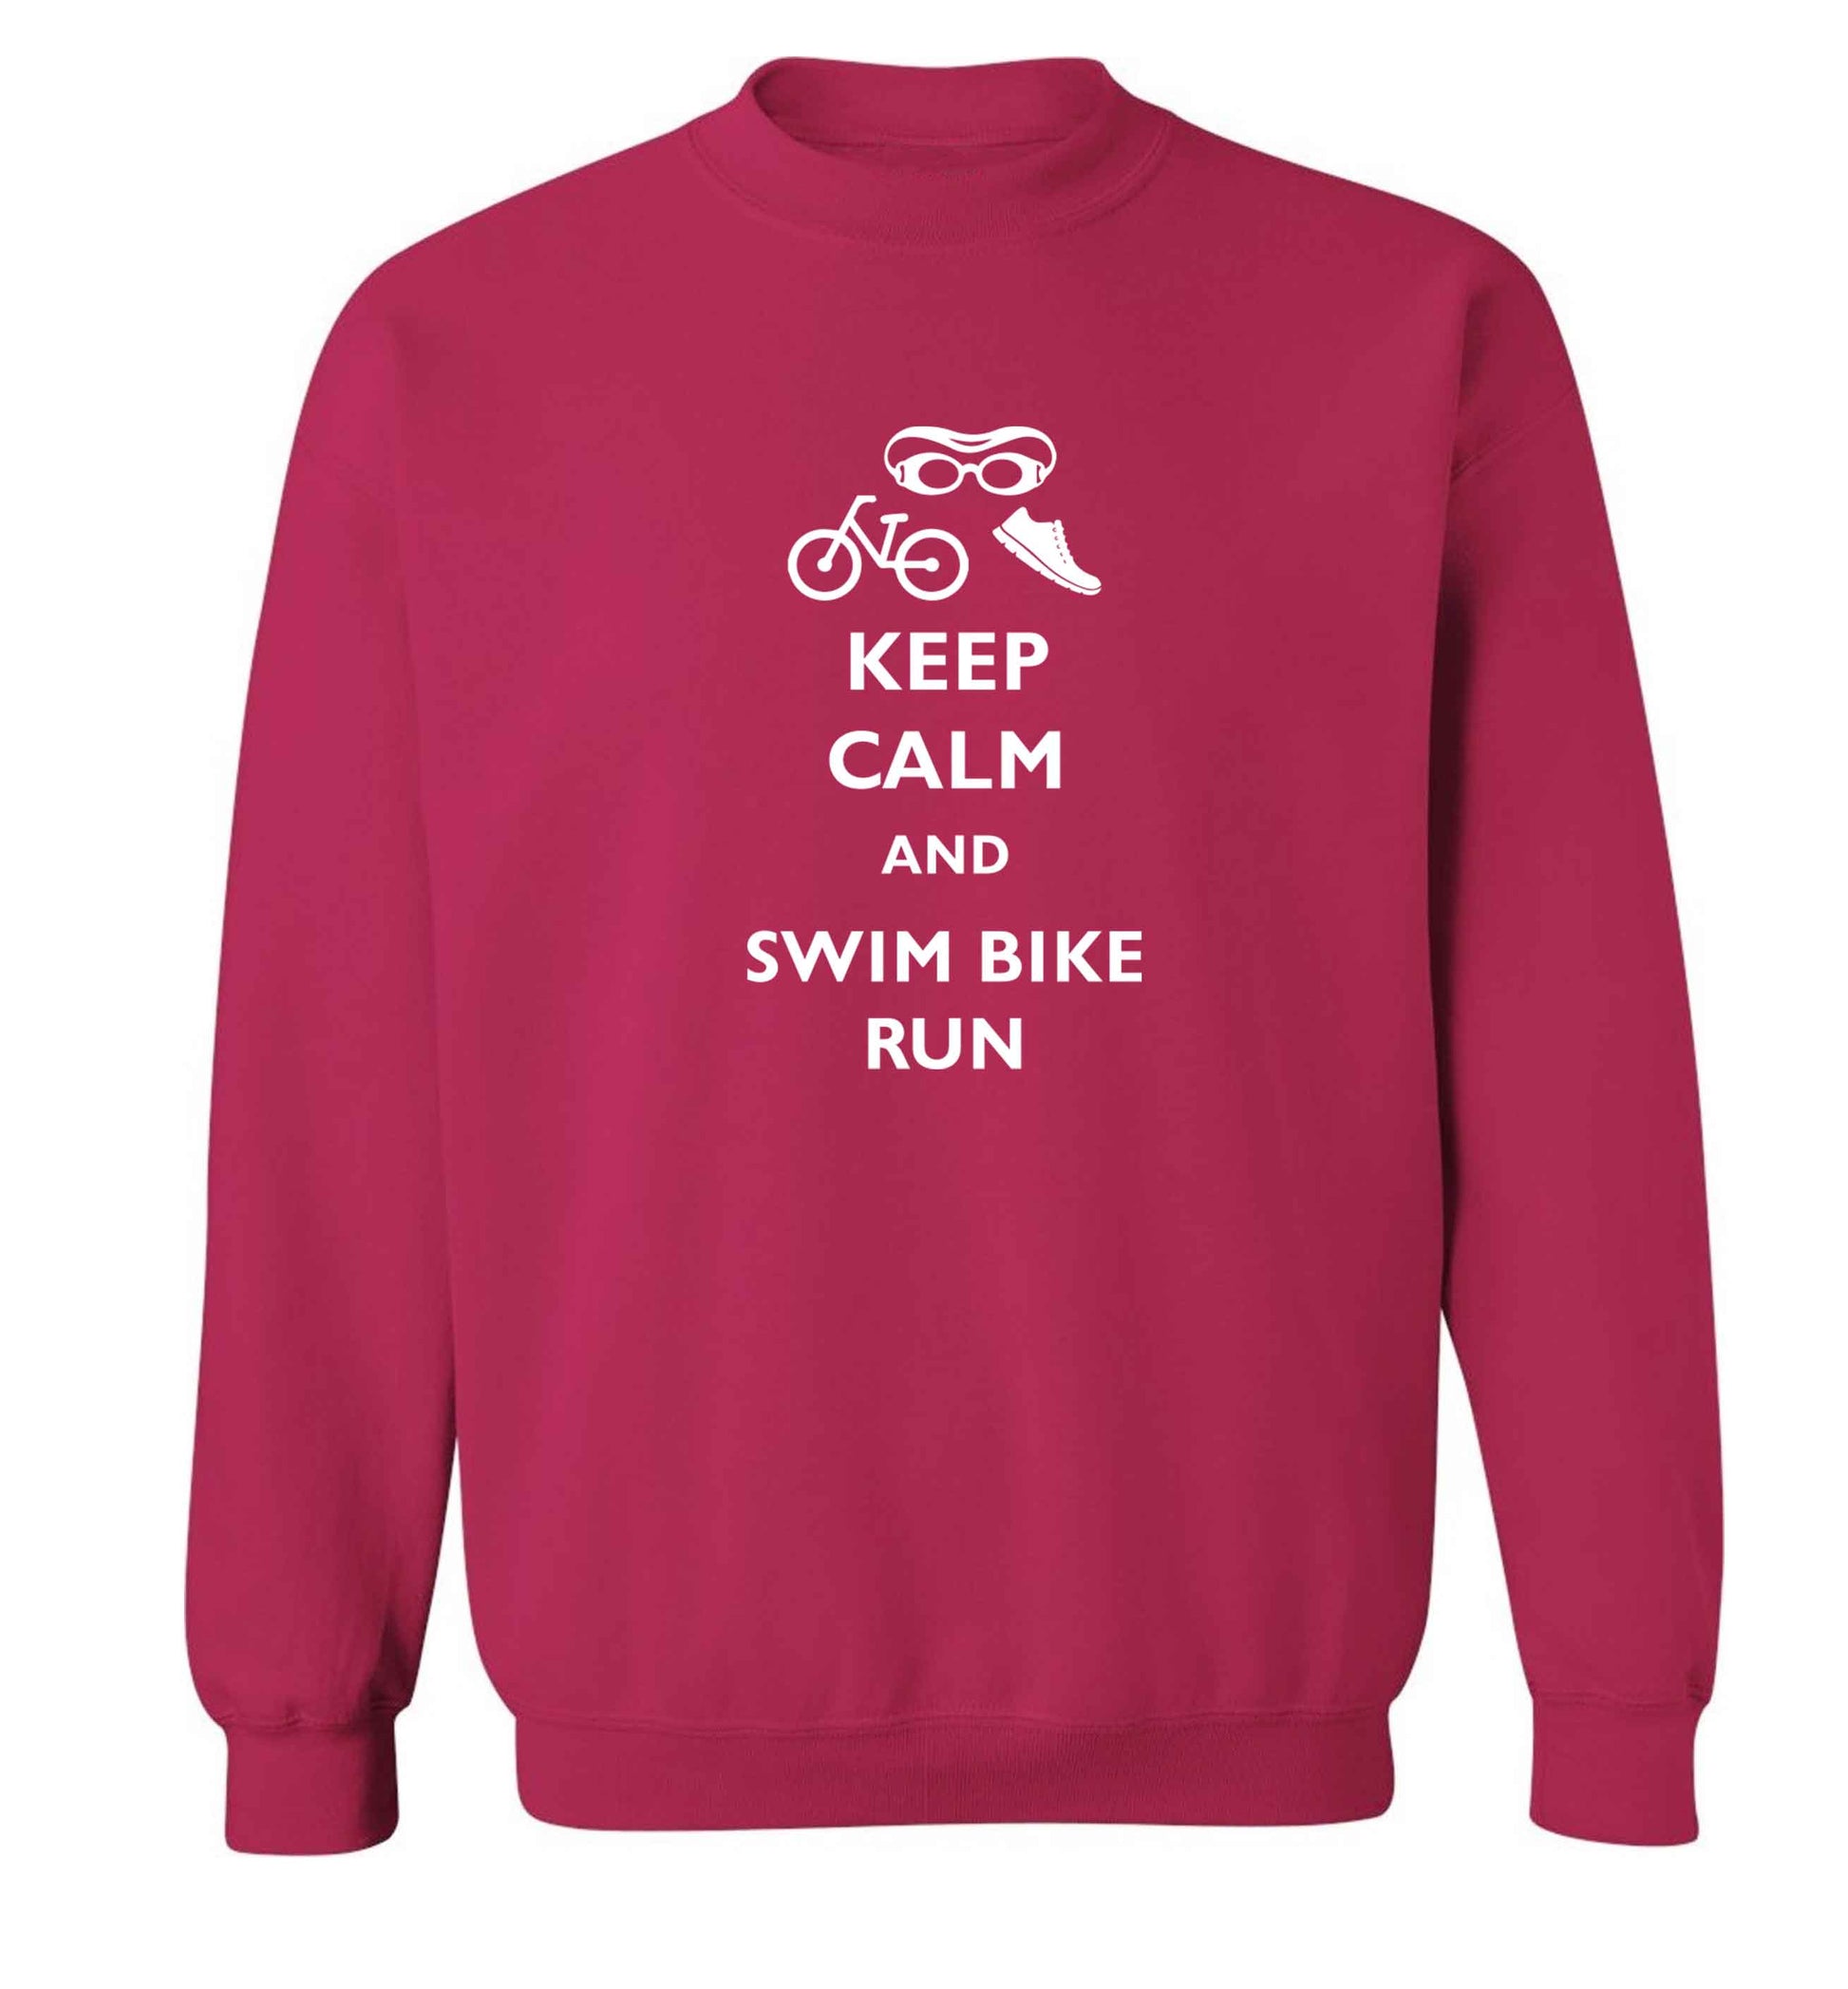 Keep calm and swim bike run adult's unisex pink sweater 2XL